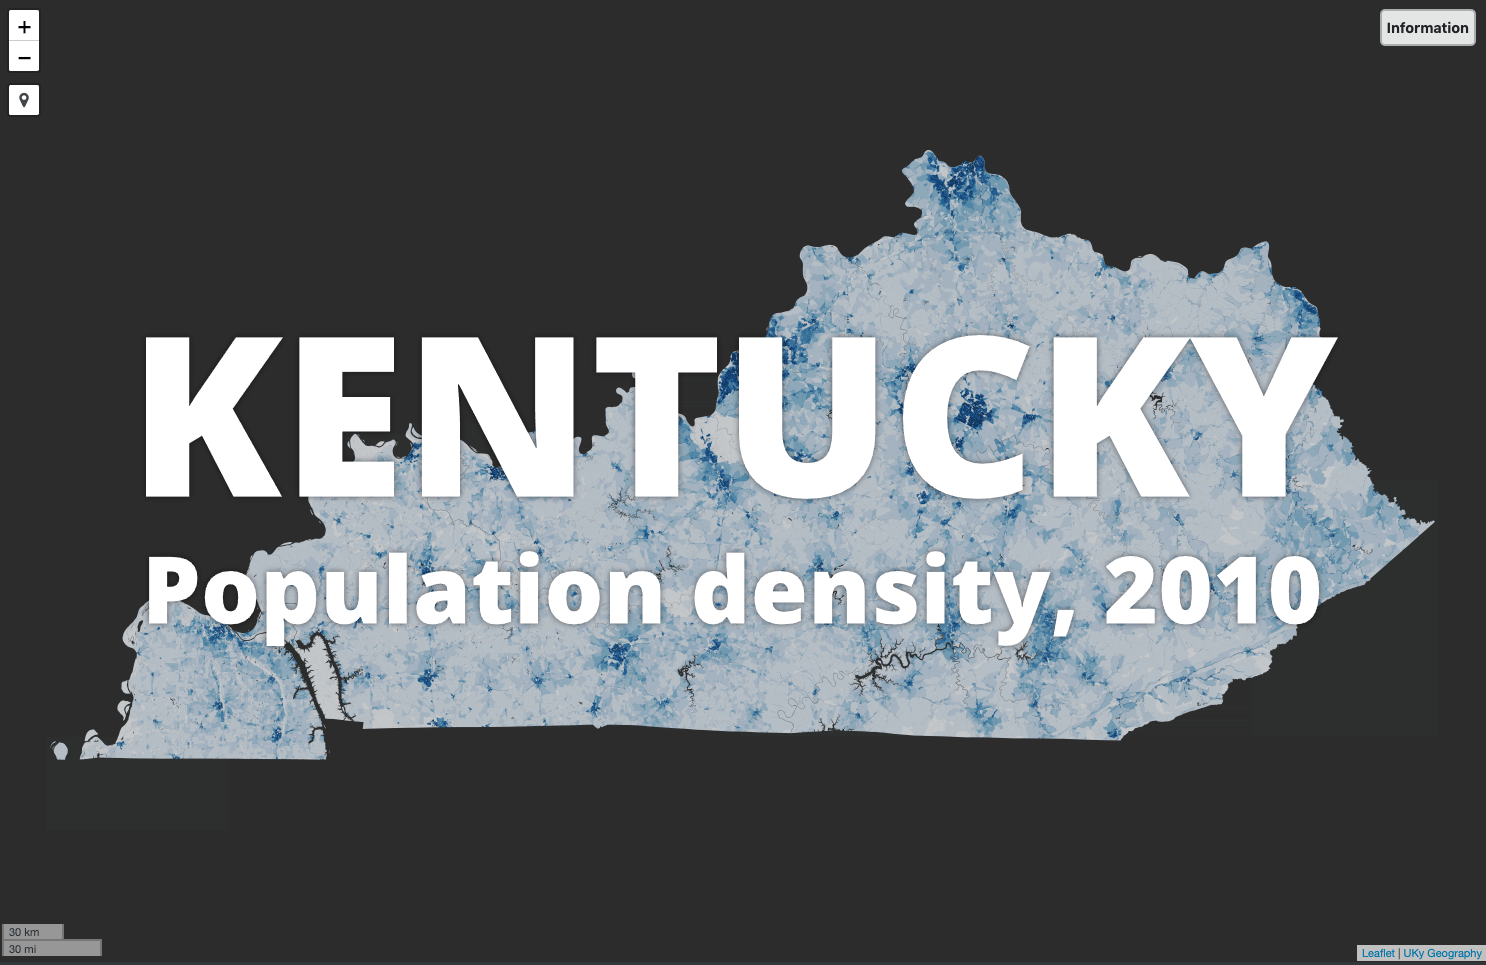 Kentucky population density